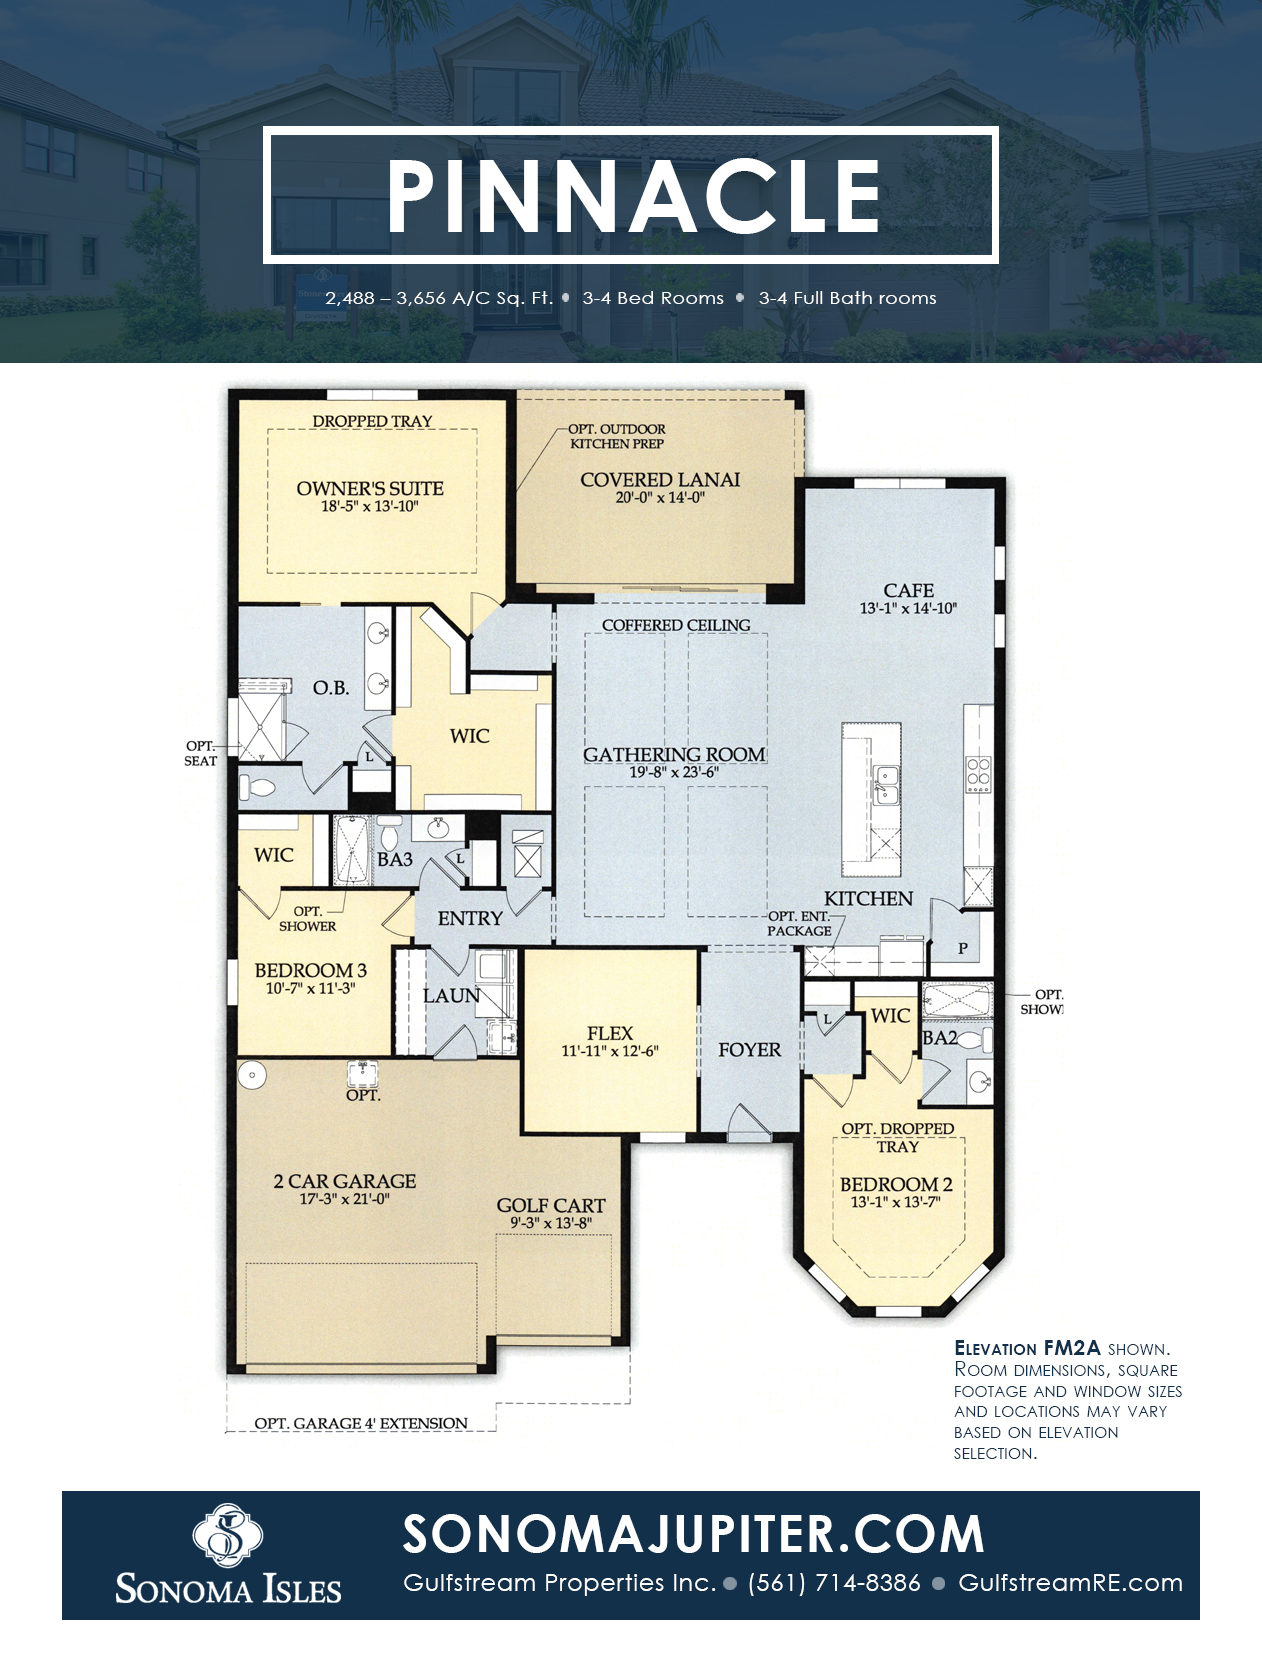 Sonoma Isles Pinnacle Floor Plan New Construction